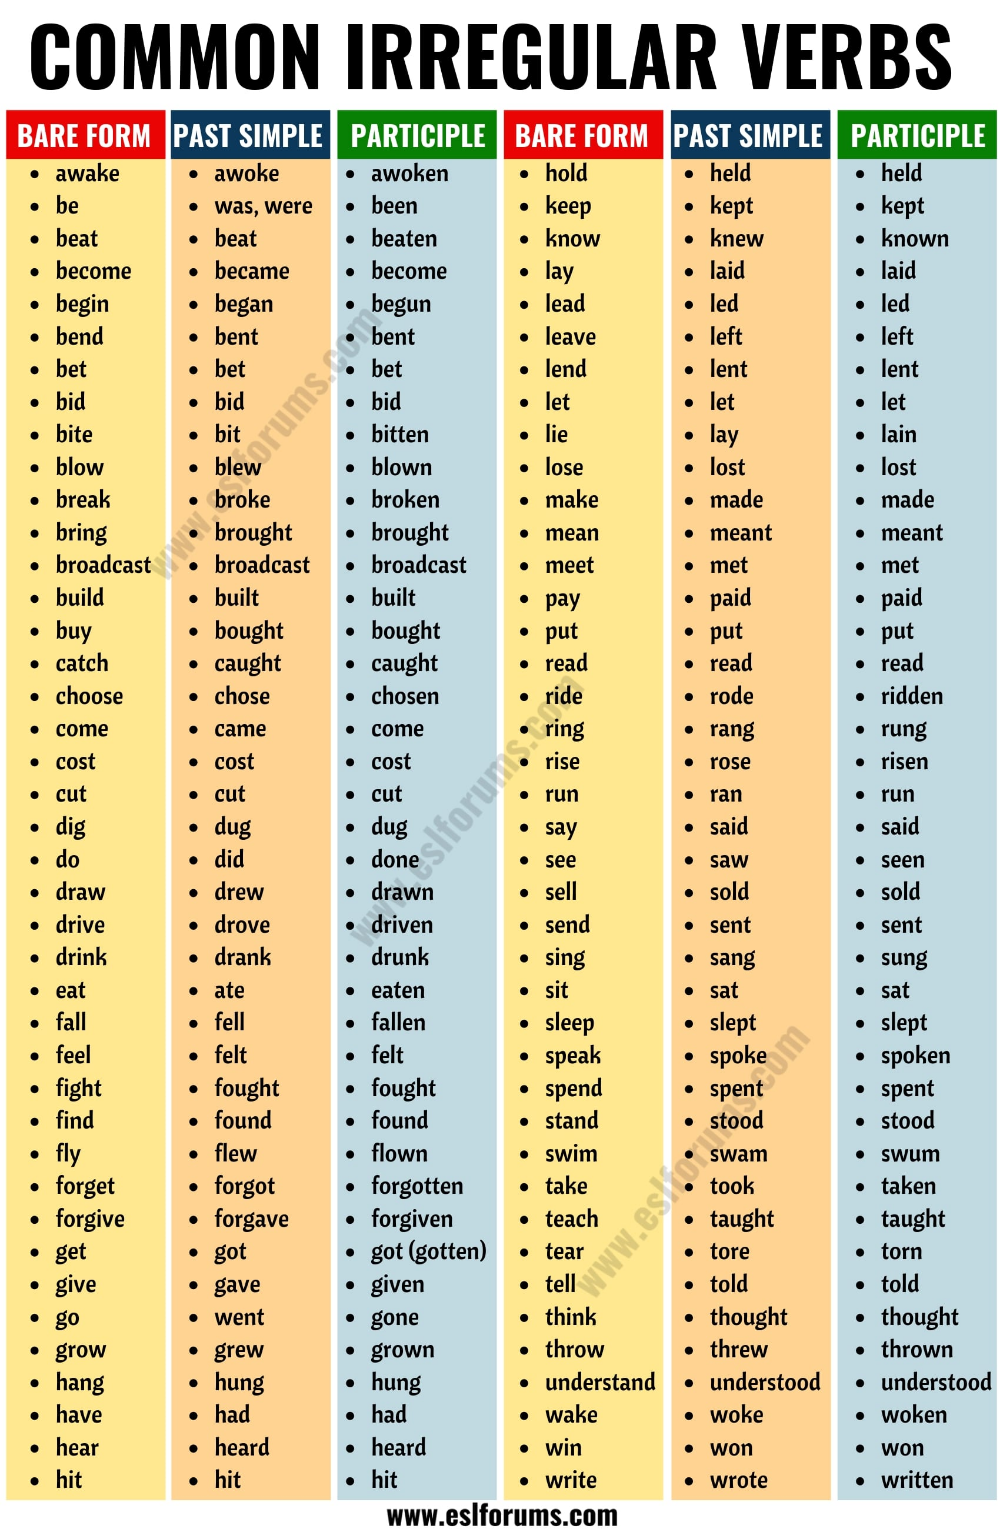 Most Common Irrgegular Verbs In Past Esl Worksheet